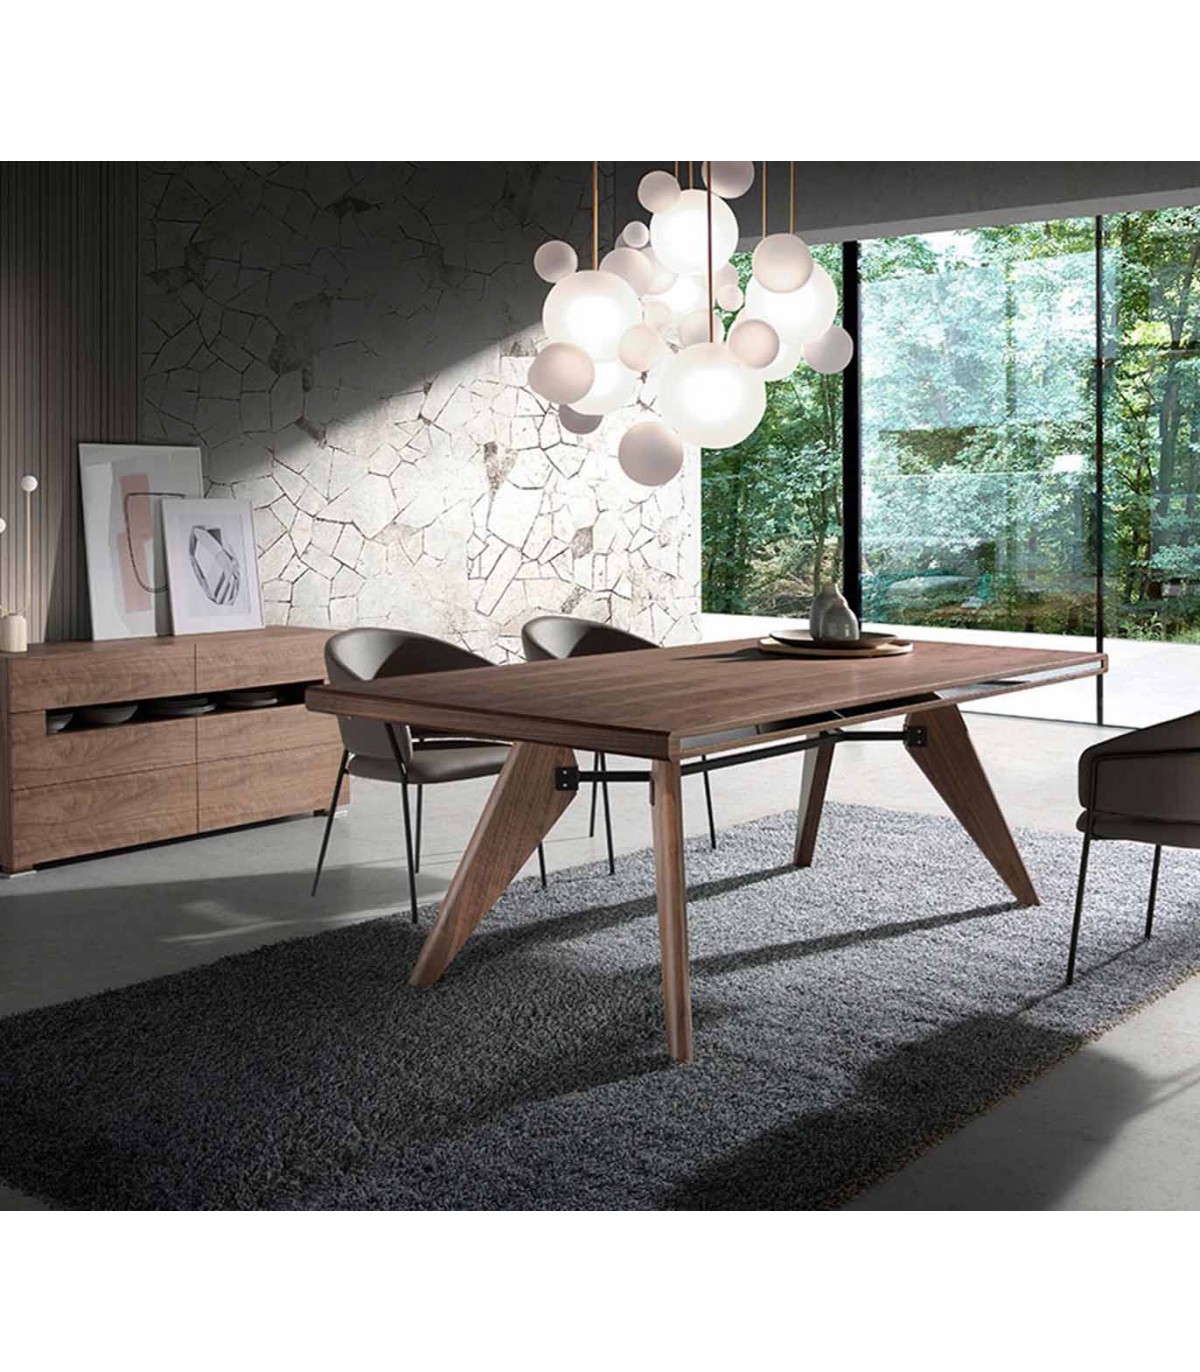 mueble para tv tenerife de madera color nogal natural 160 cm